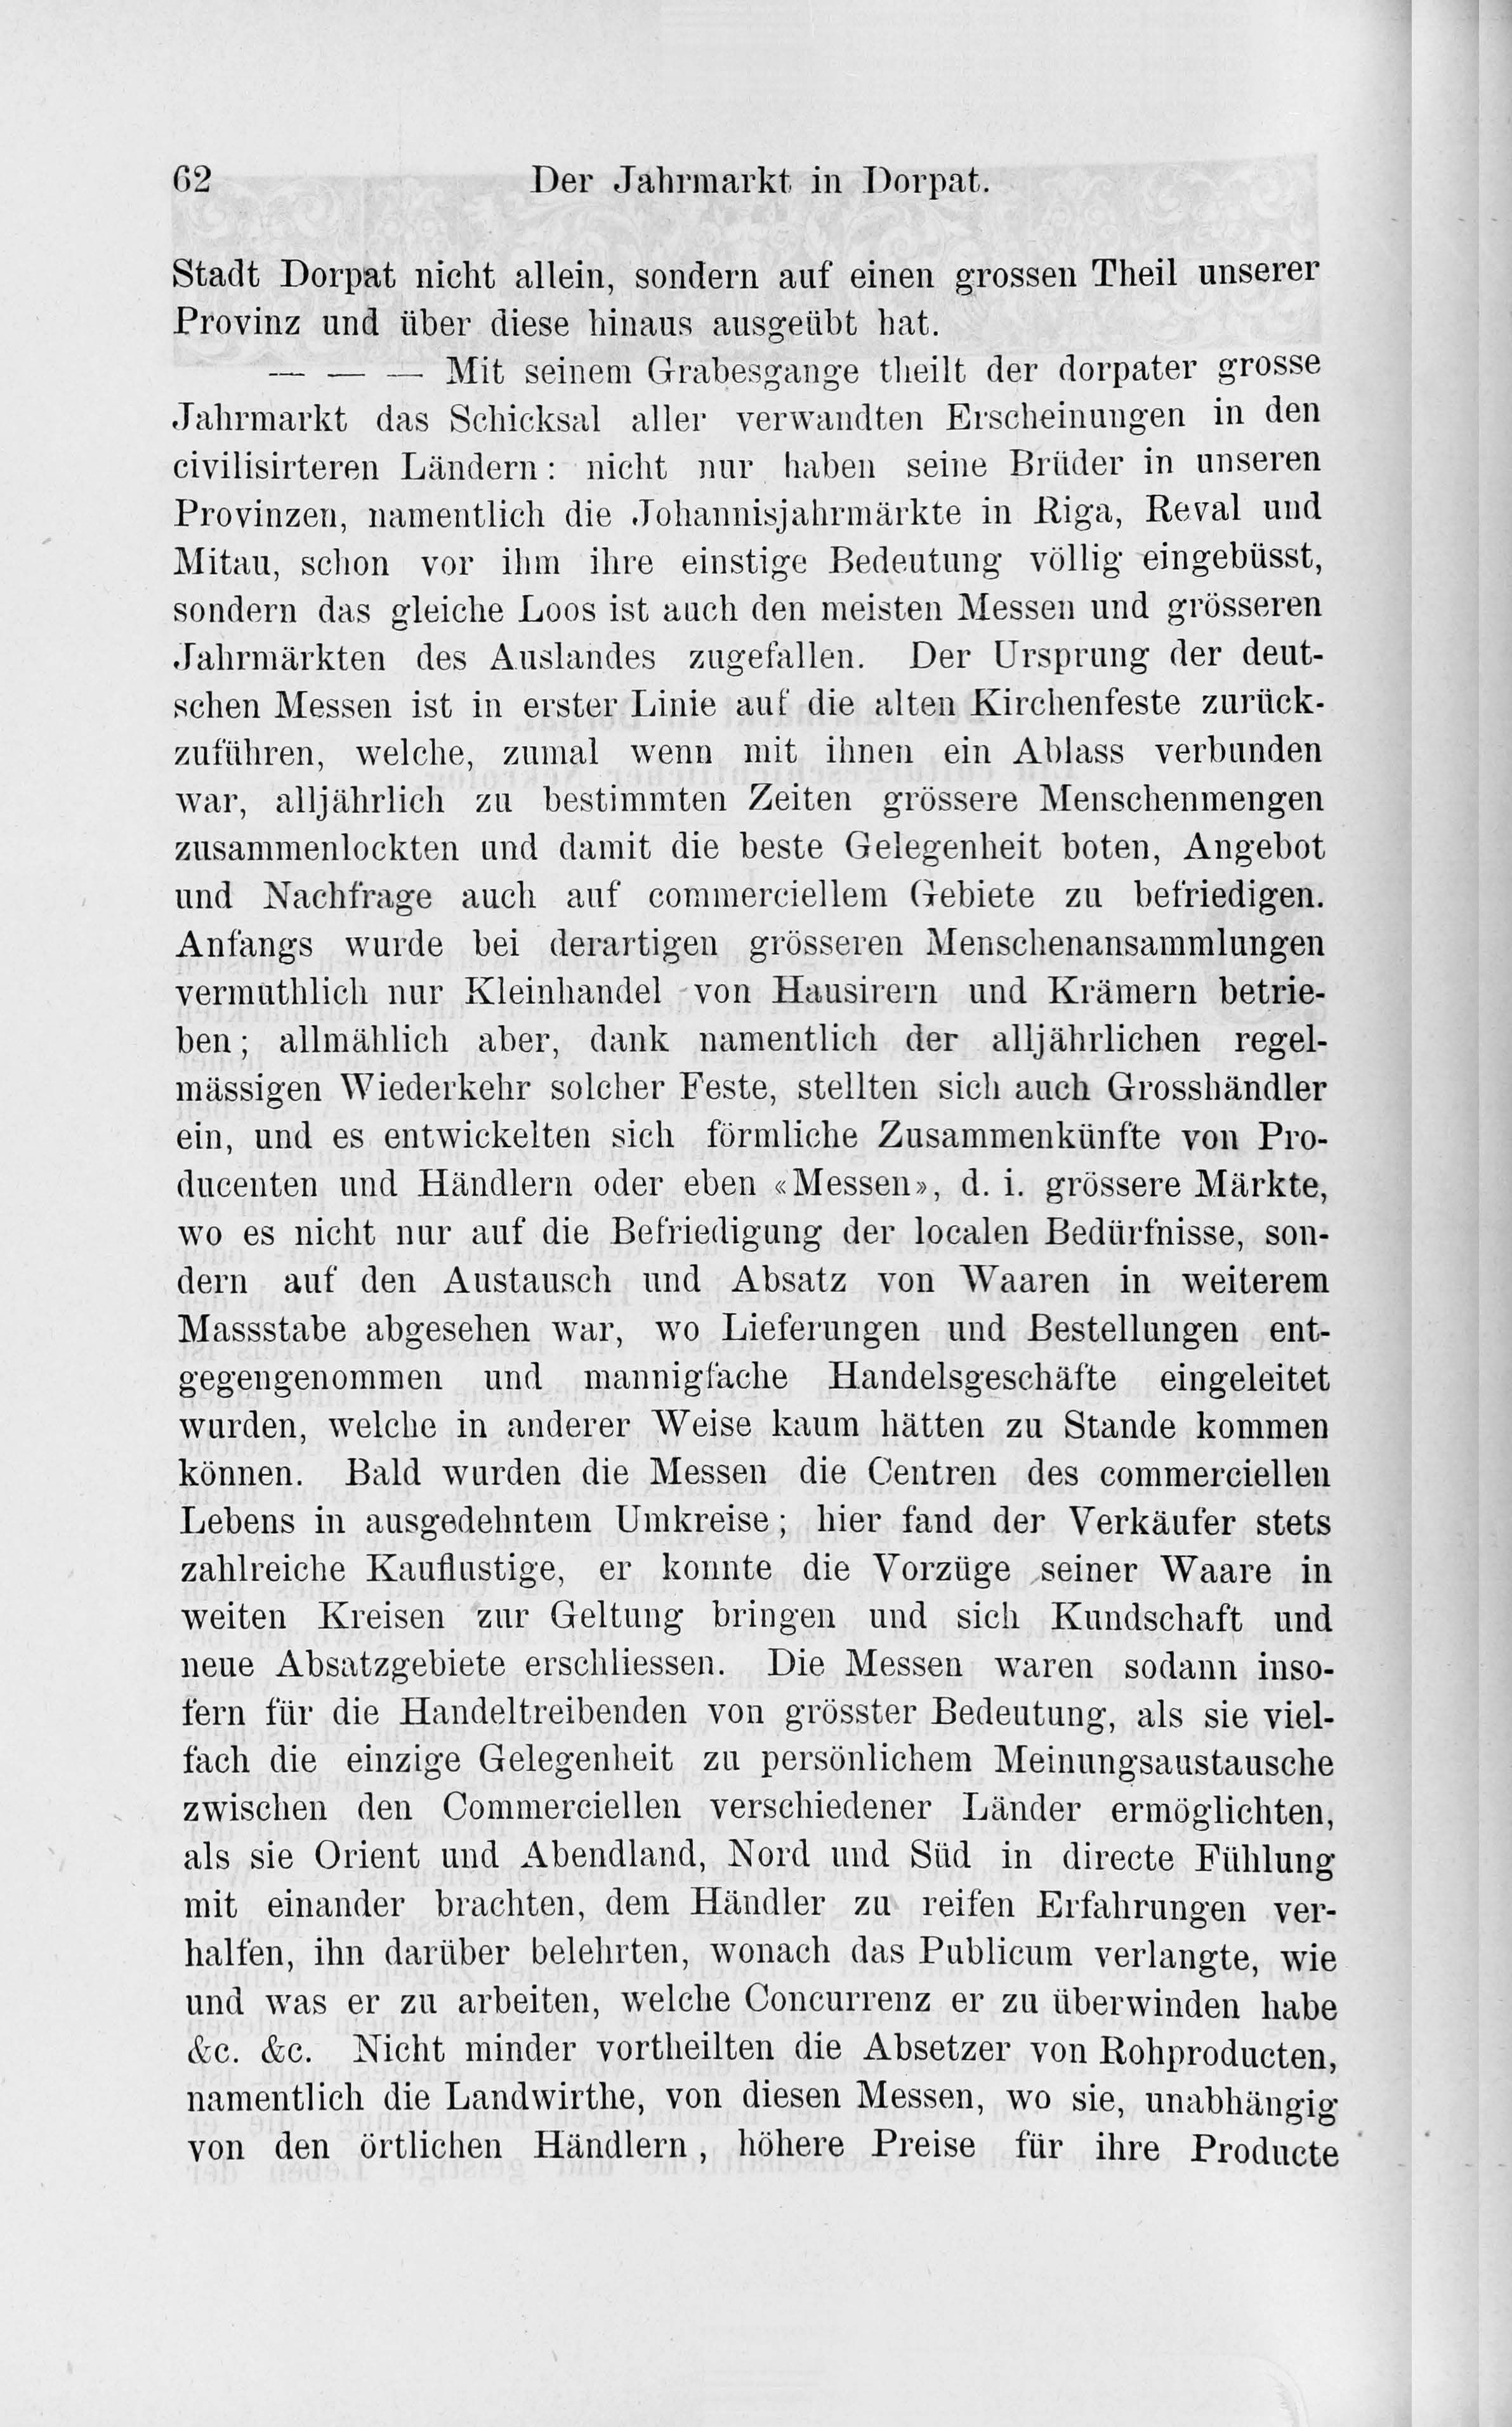 Der Jahrmarkt in Dorpat (1884) | 2. Основной текст